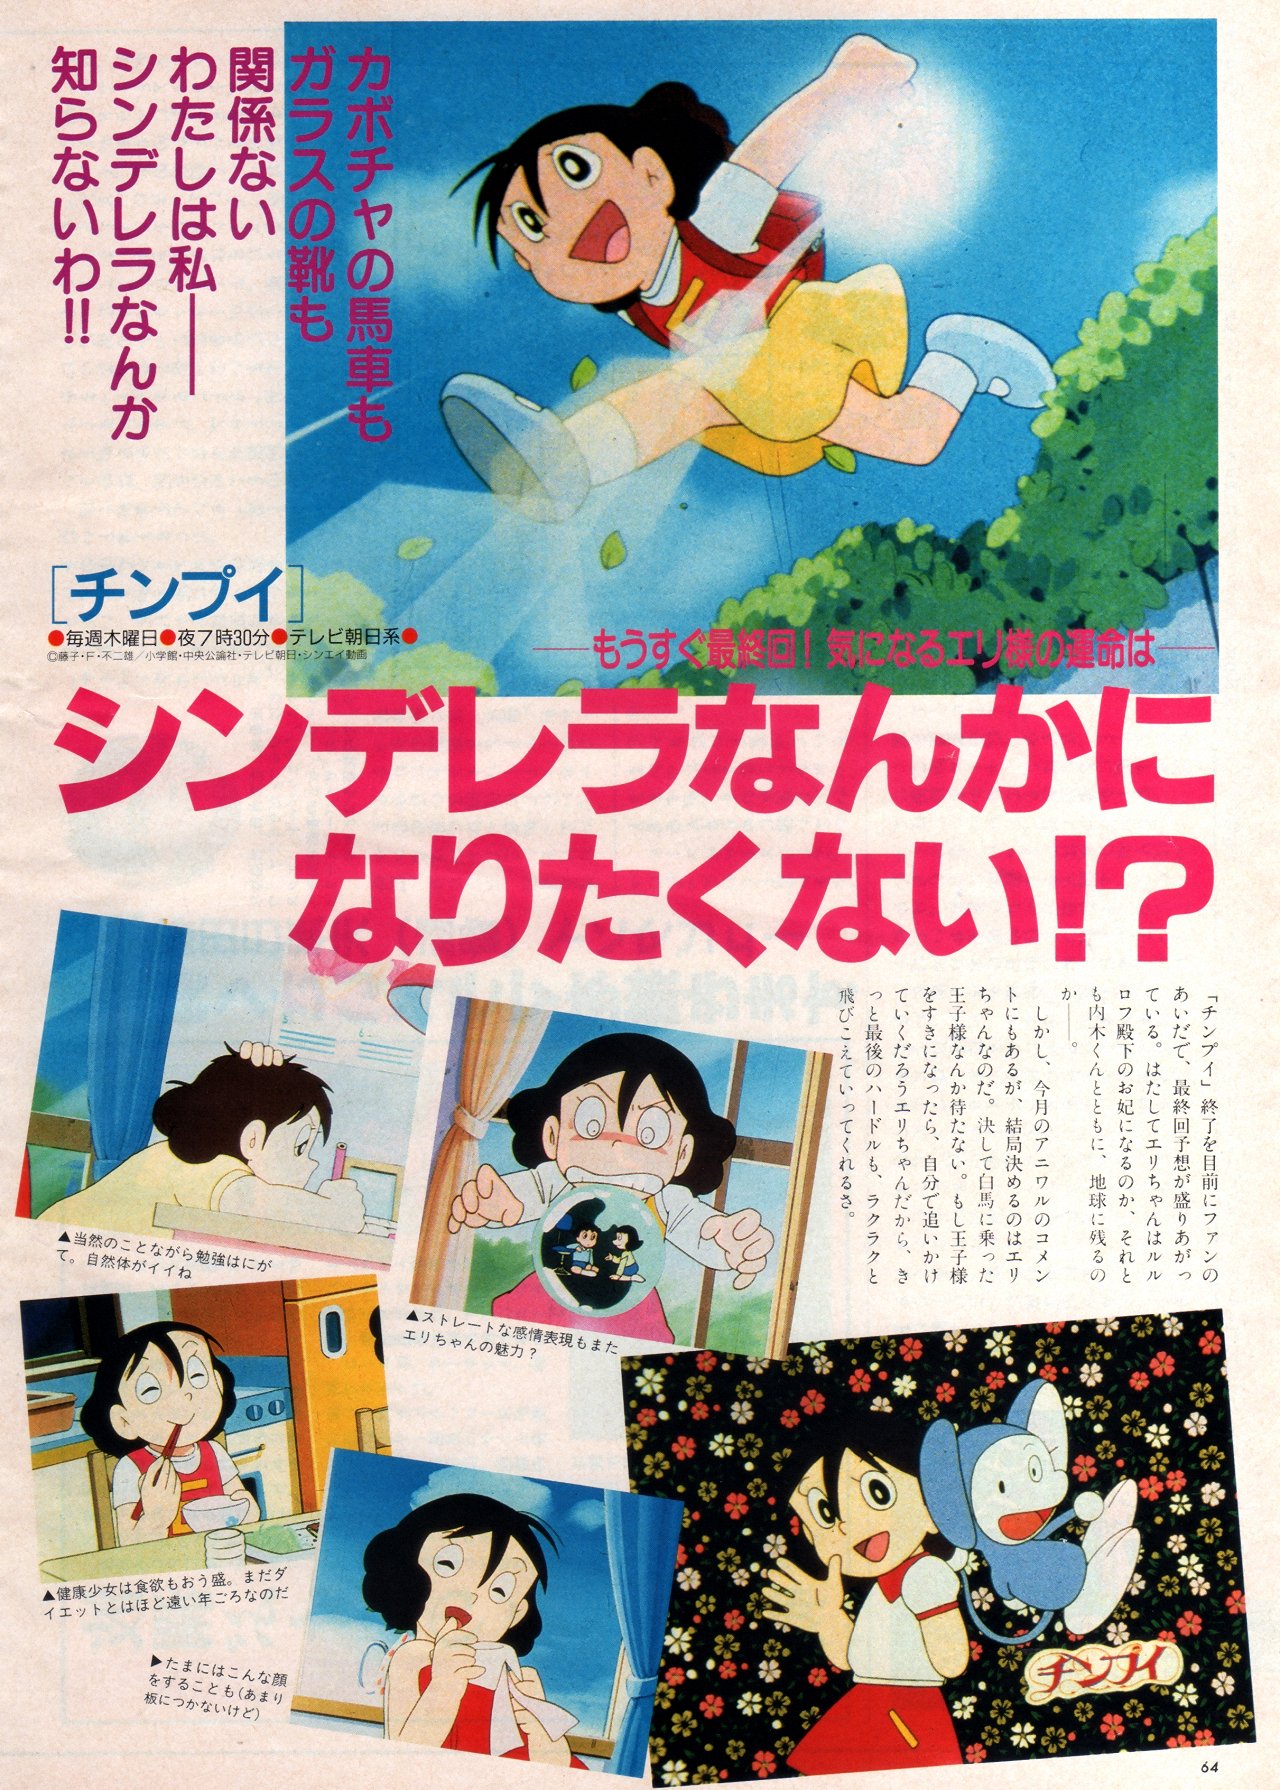 Animarchive Animage 05 1991 Chinpui Tv Anime T Co Hxokf4wnxh